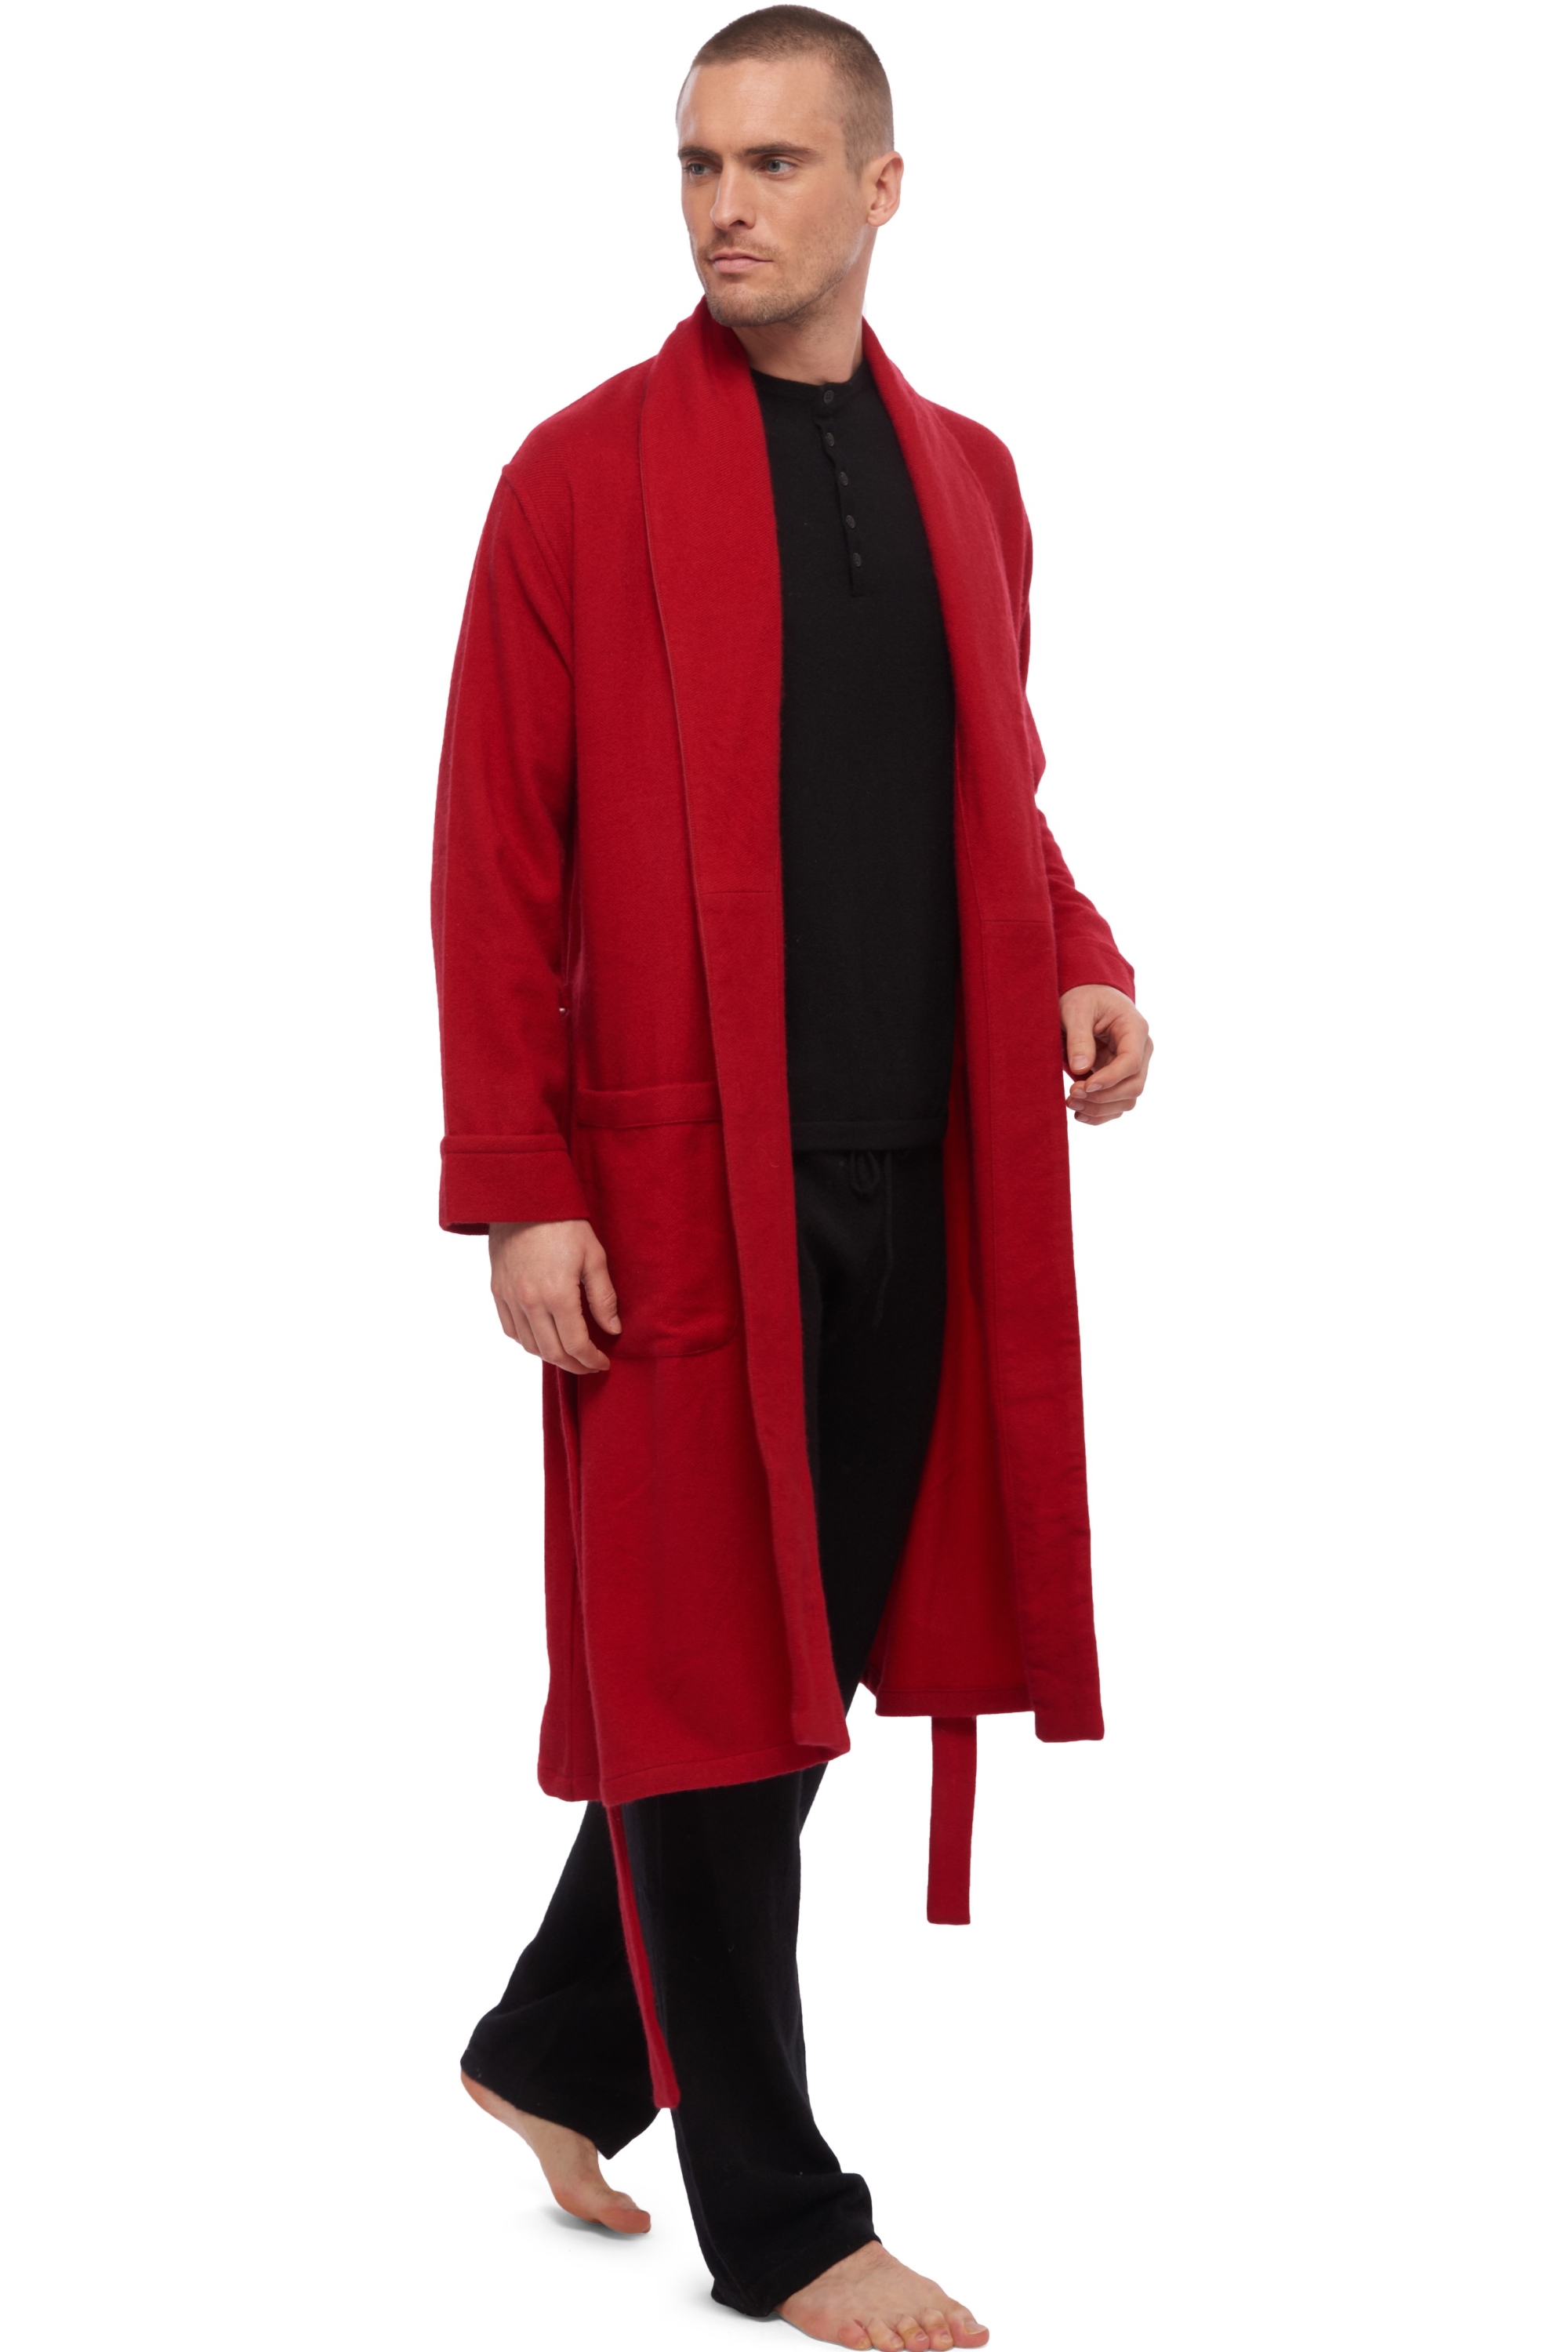 Cachemire accessoires homewear working rouge profond t3